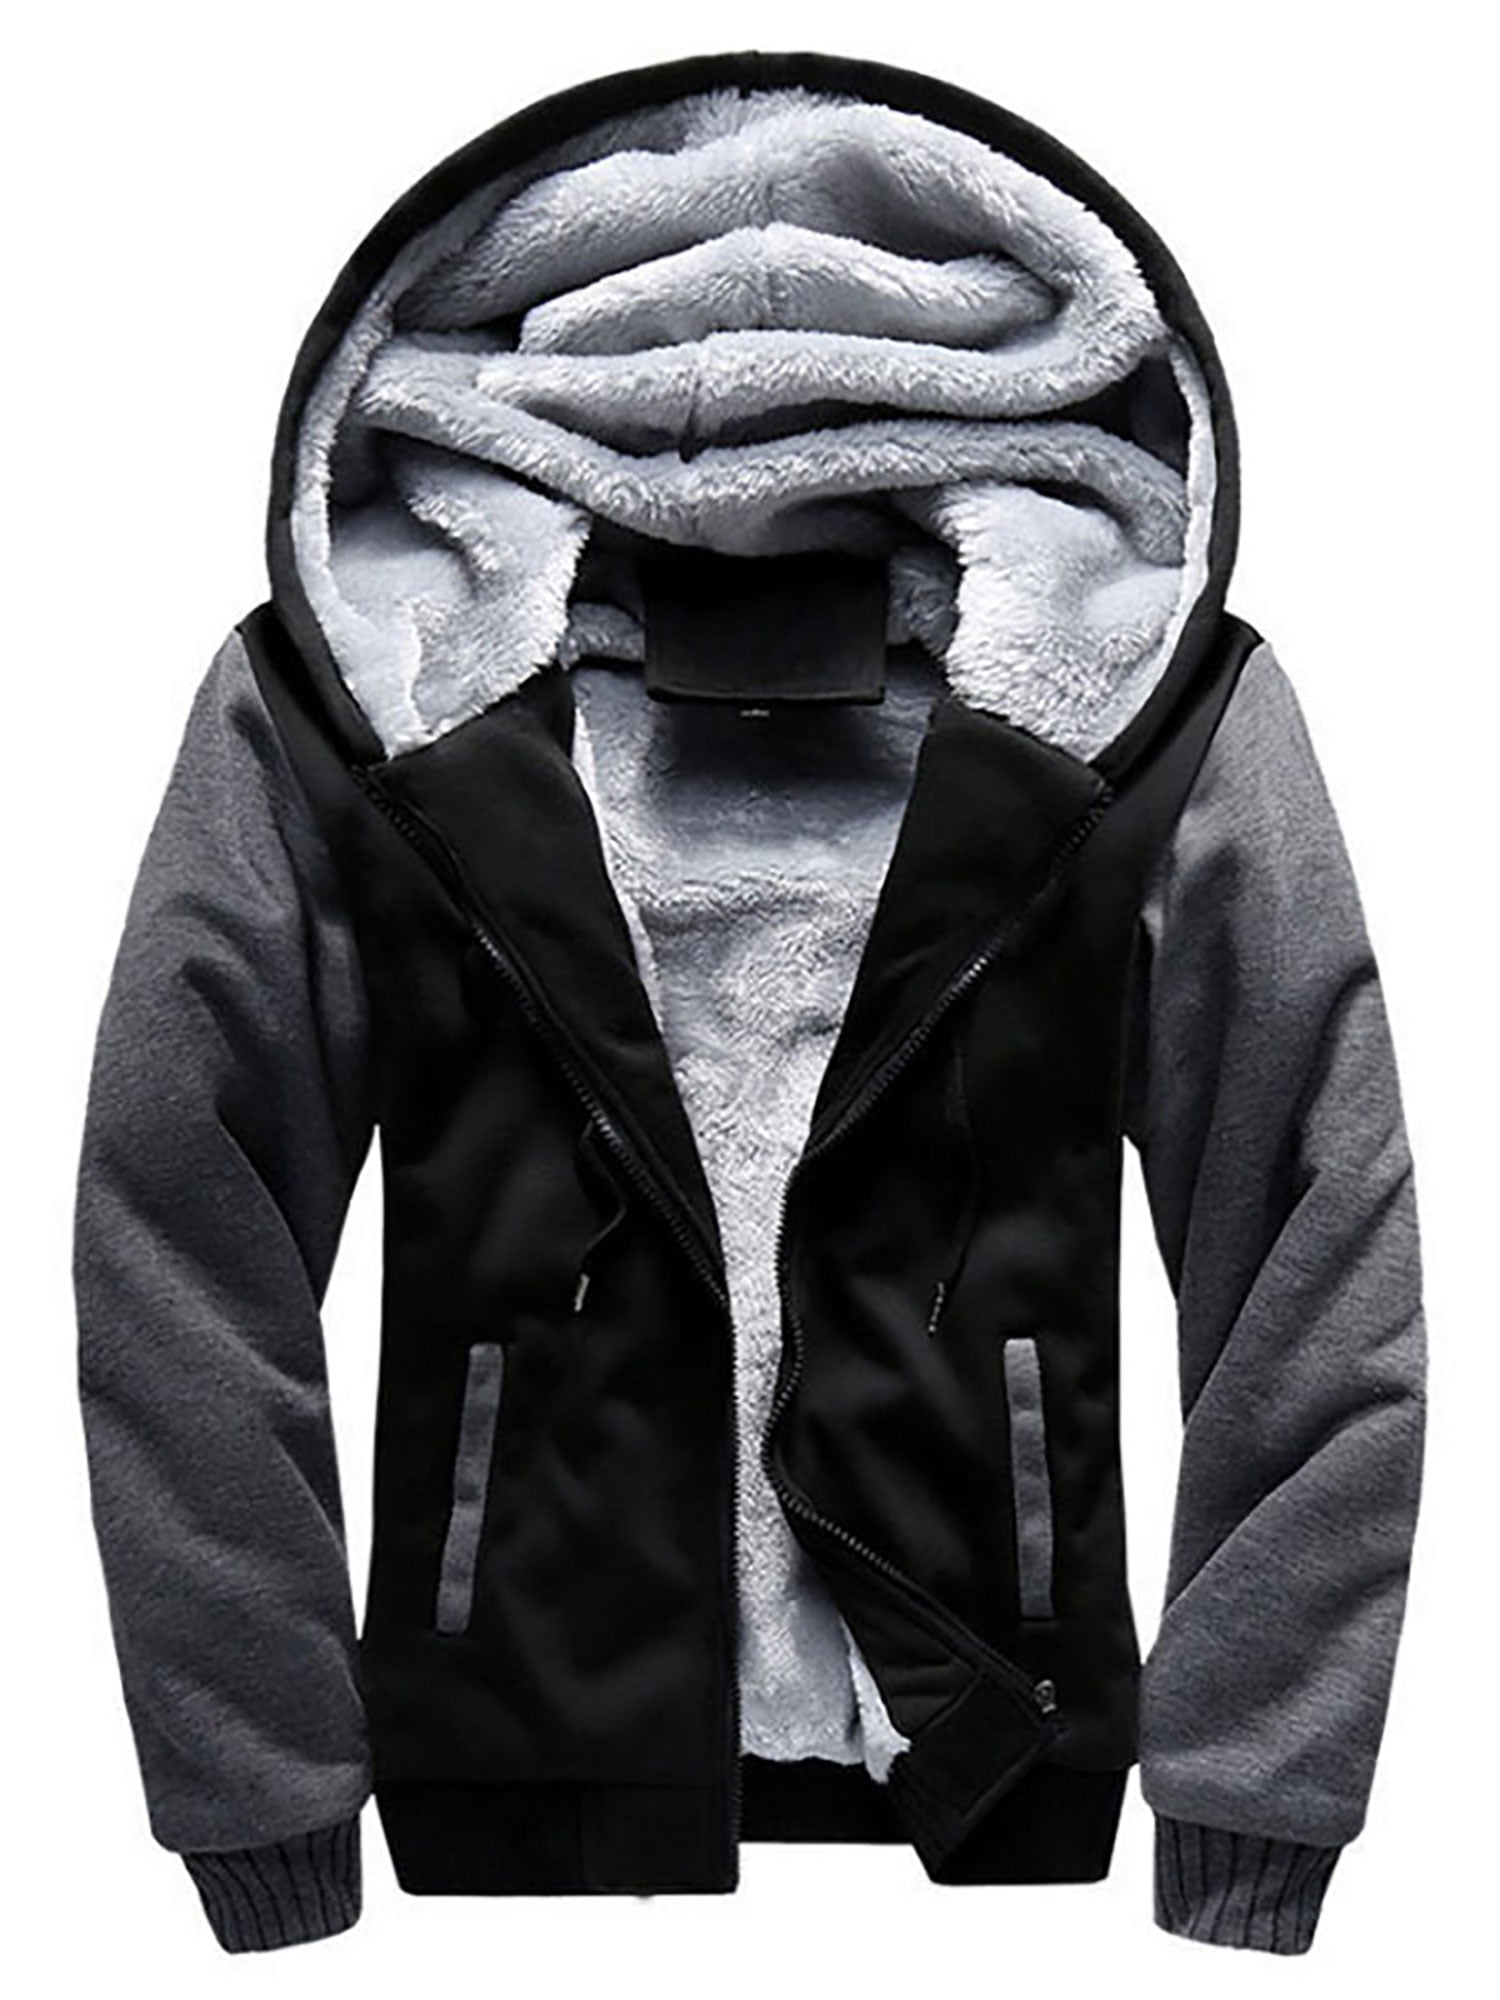 vkwear Mens Athletic Soft Sherpa Lined Fleece Zip Up Hoodie Sweater Jacket 